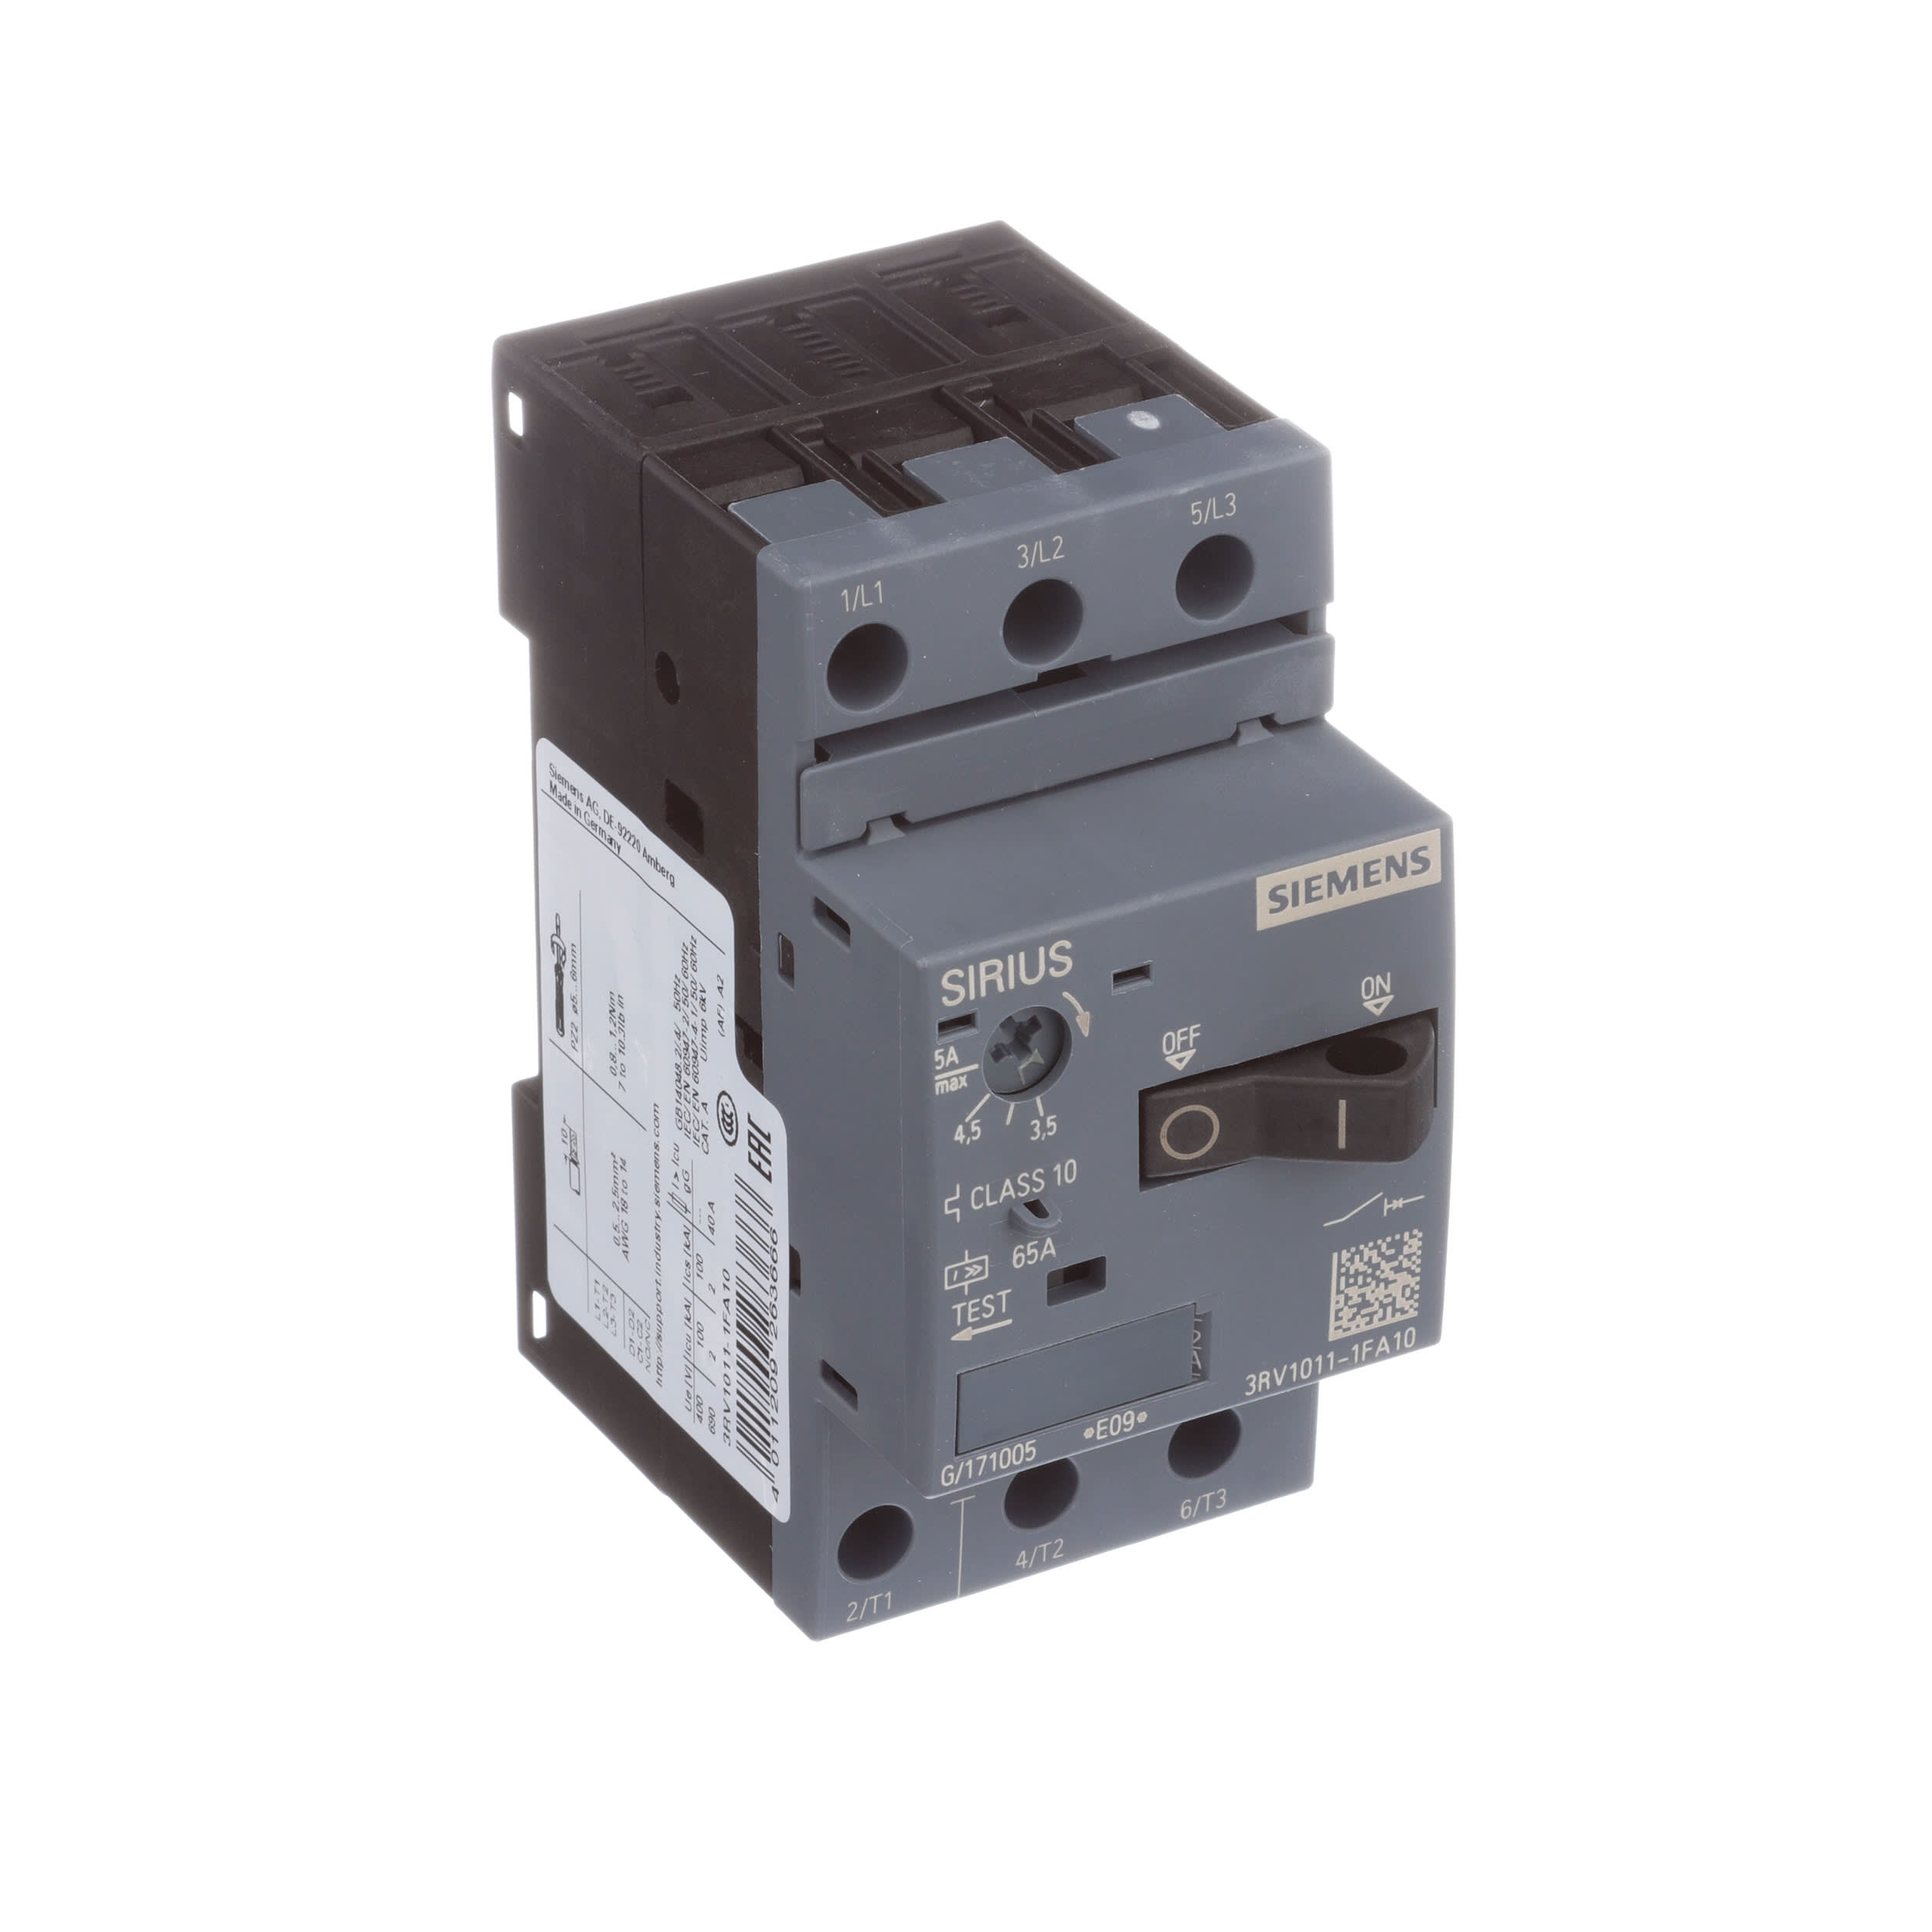 Siemens 3RV1011 Motor starter protector 1.25A contactor 